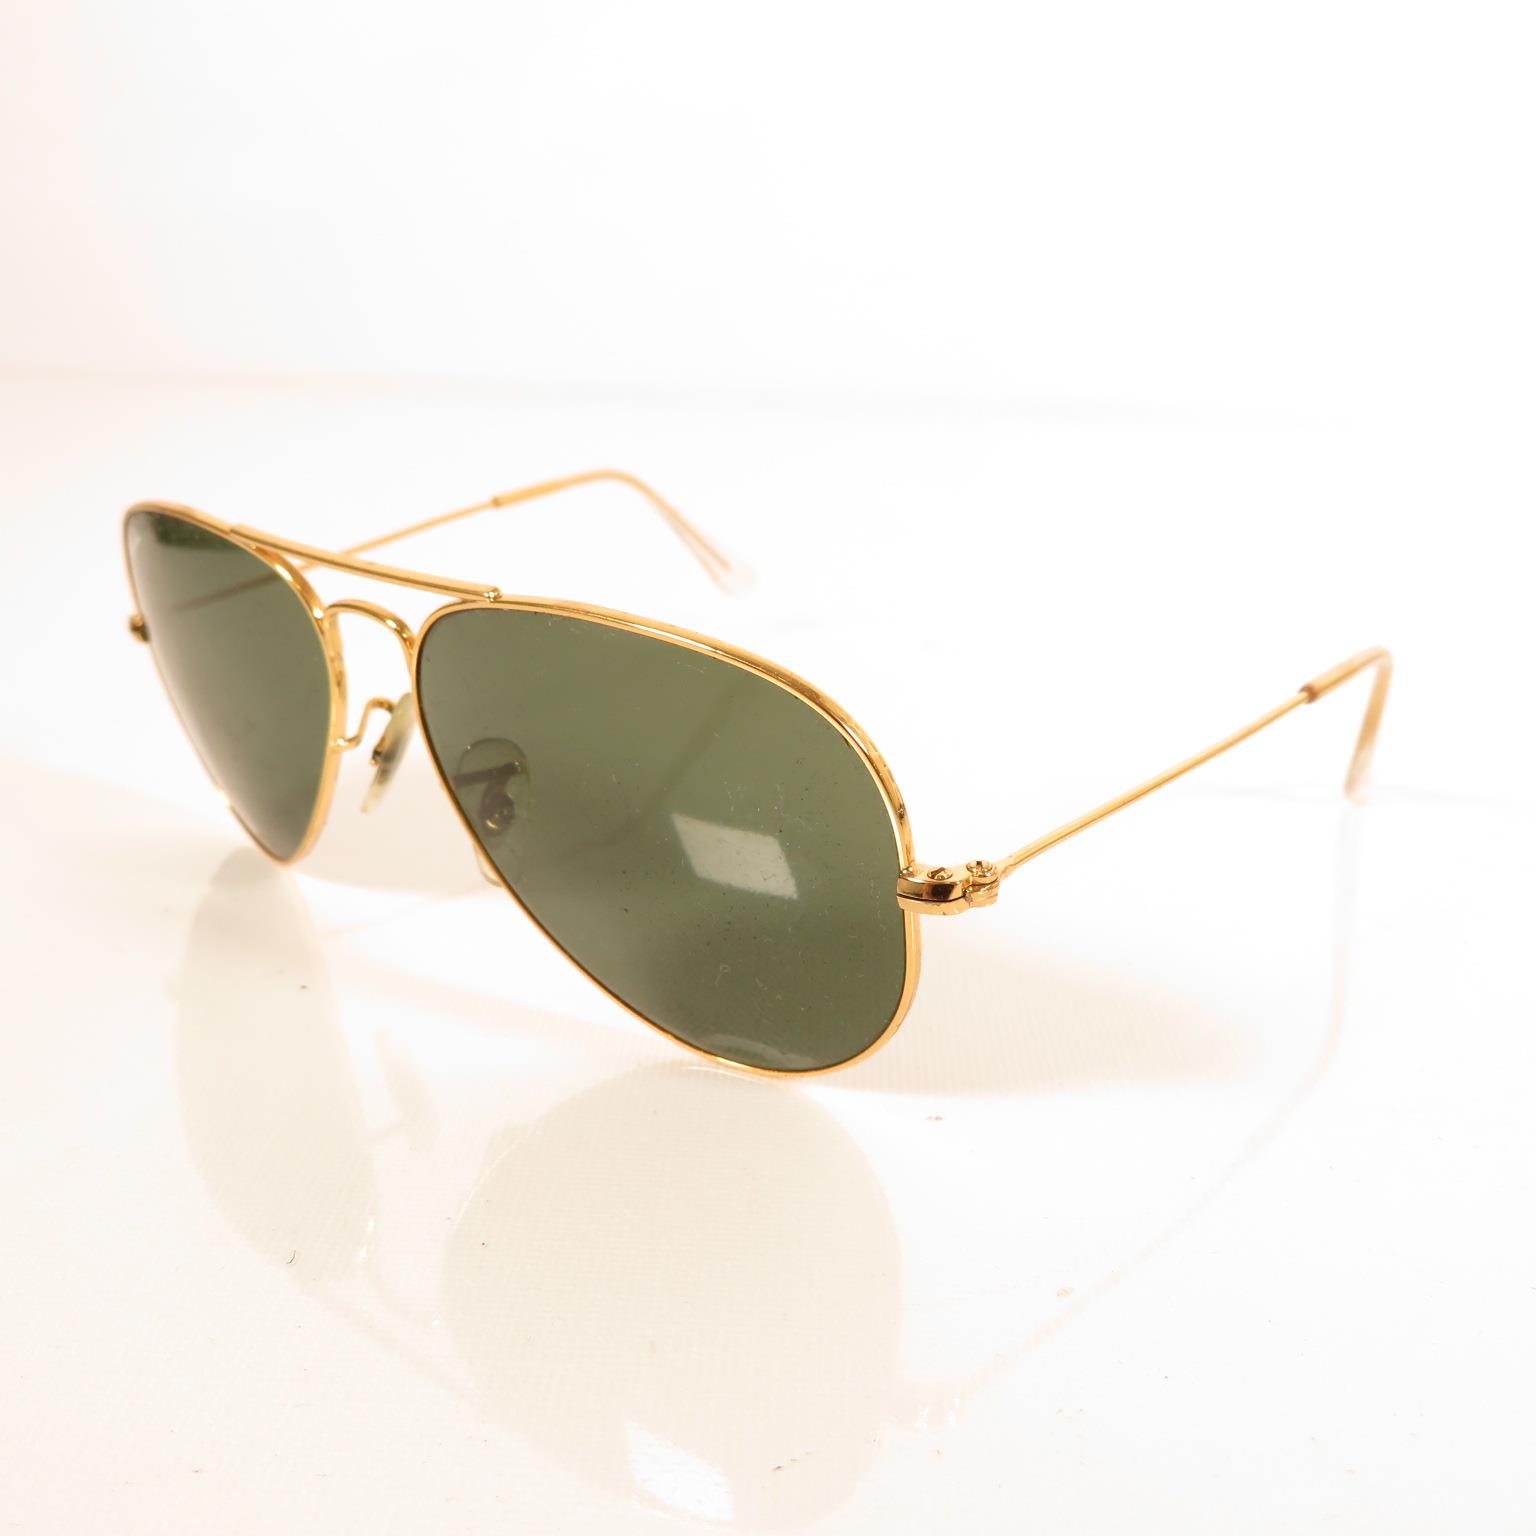 5x sets Ray Ban sunglasses - - Image 9 of 24